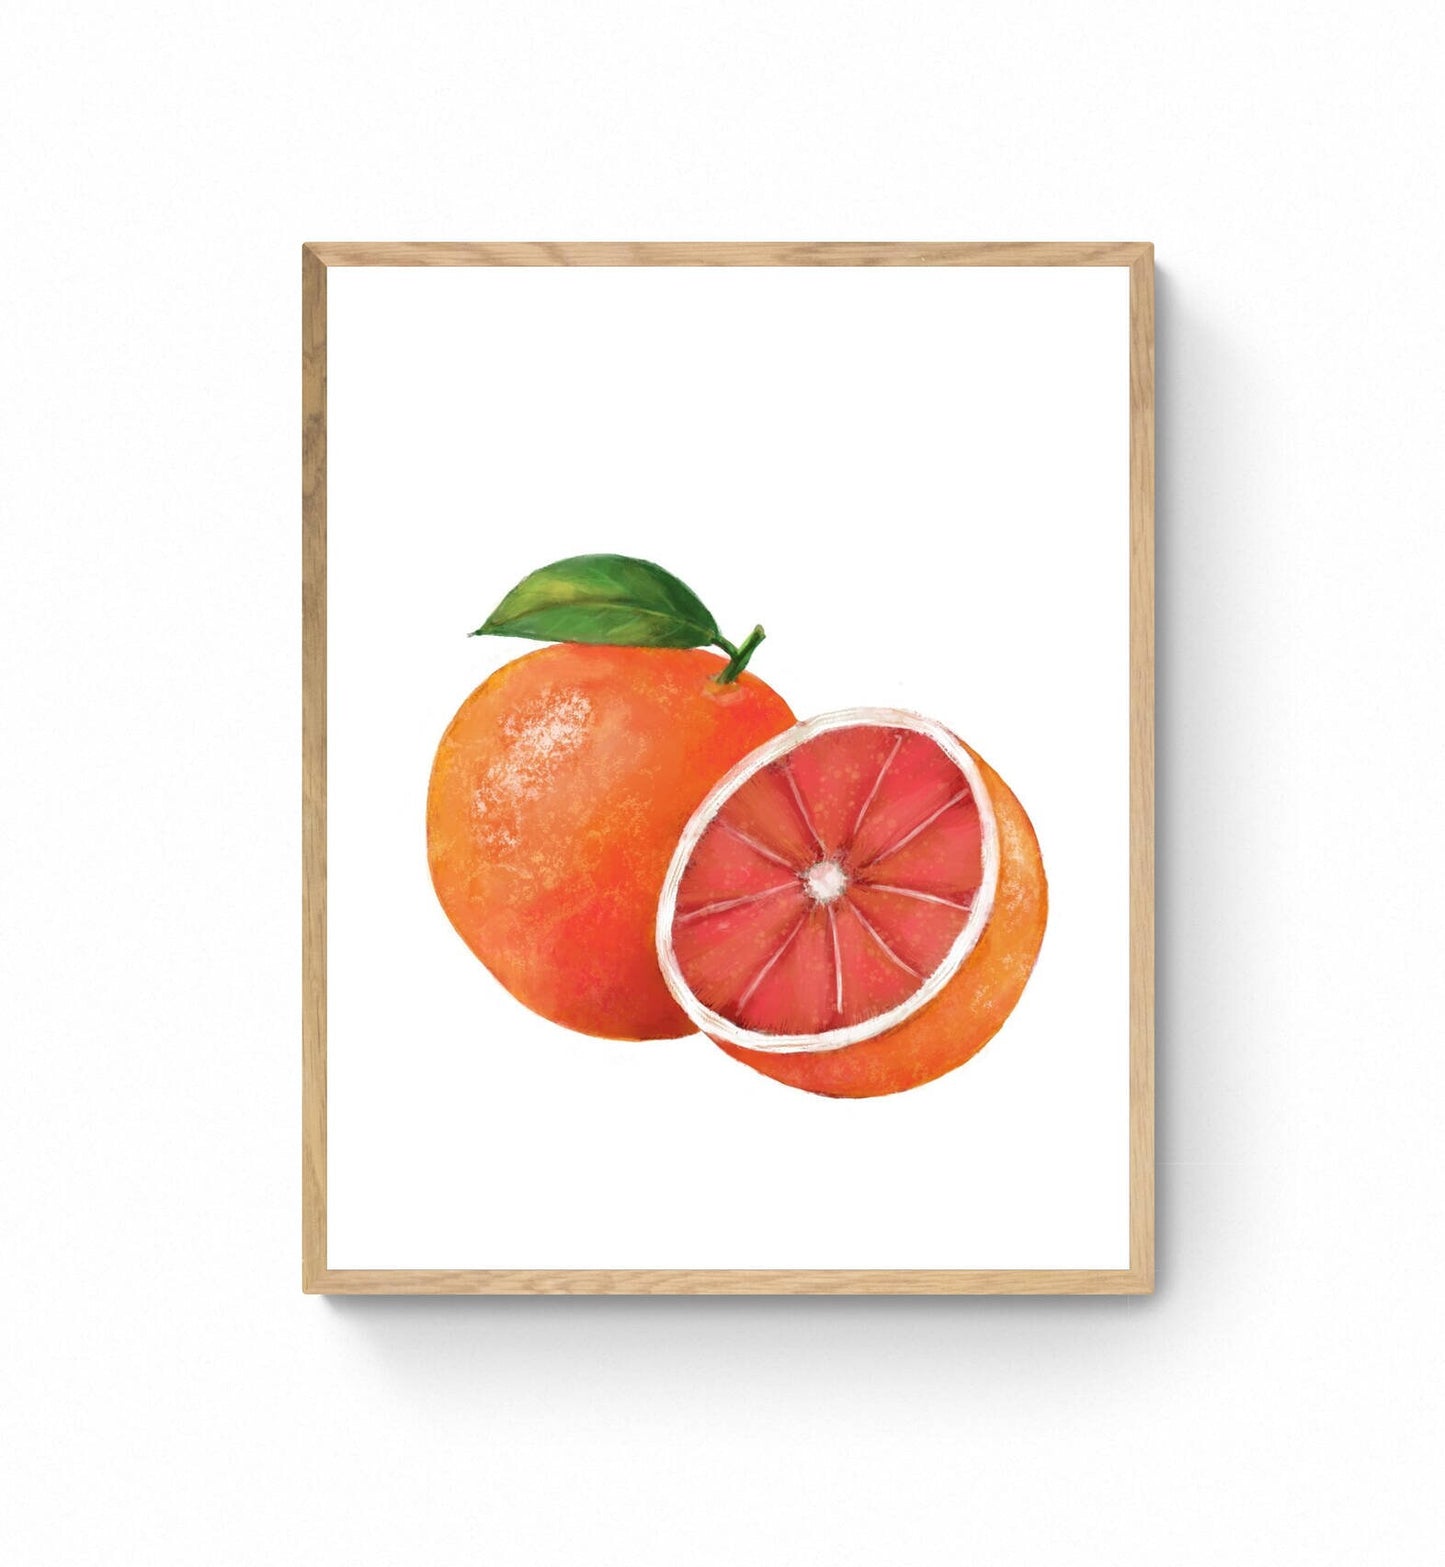 Blood Orange Art Print, Orange Wall Art, Kitchen Wall Hanging, Dining Room Decor, Citrus Painting, Fruit Illustration, Farmhouse Wall Decor